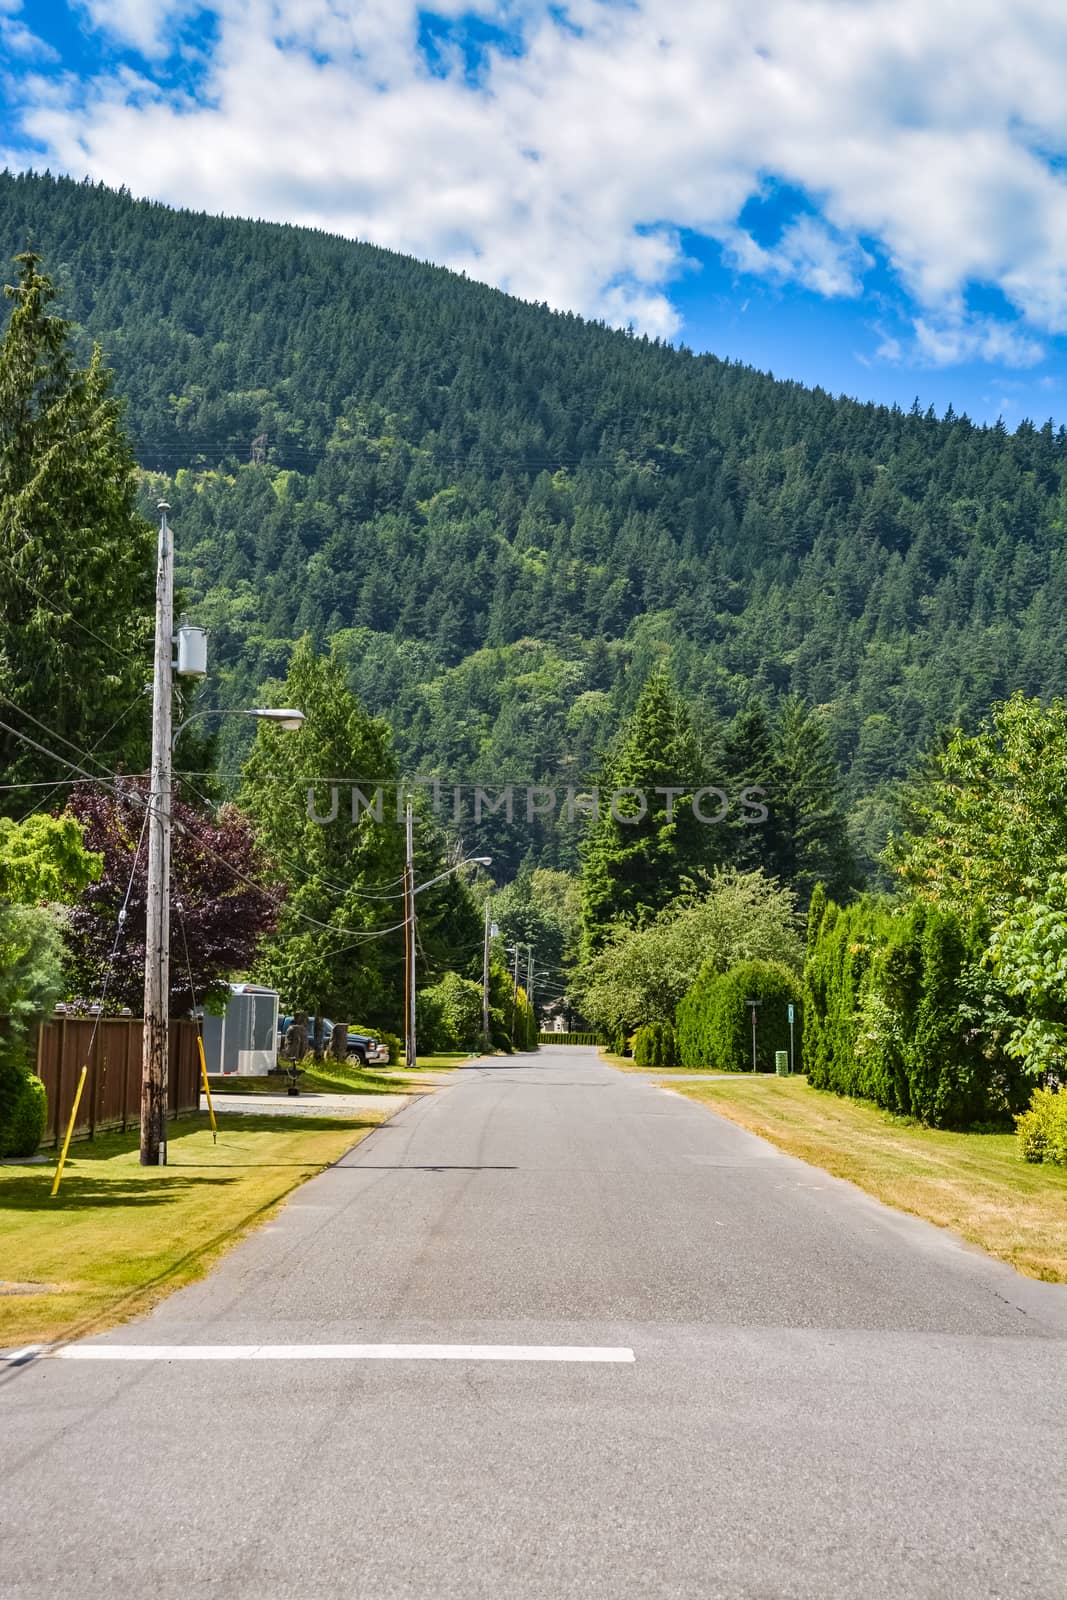 Asphalt road in rural town leading toward a mountain